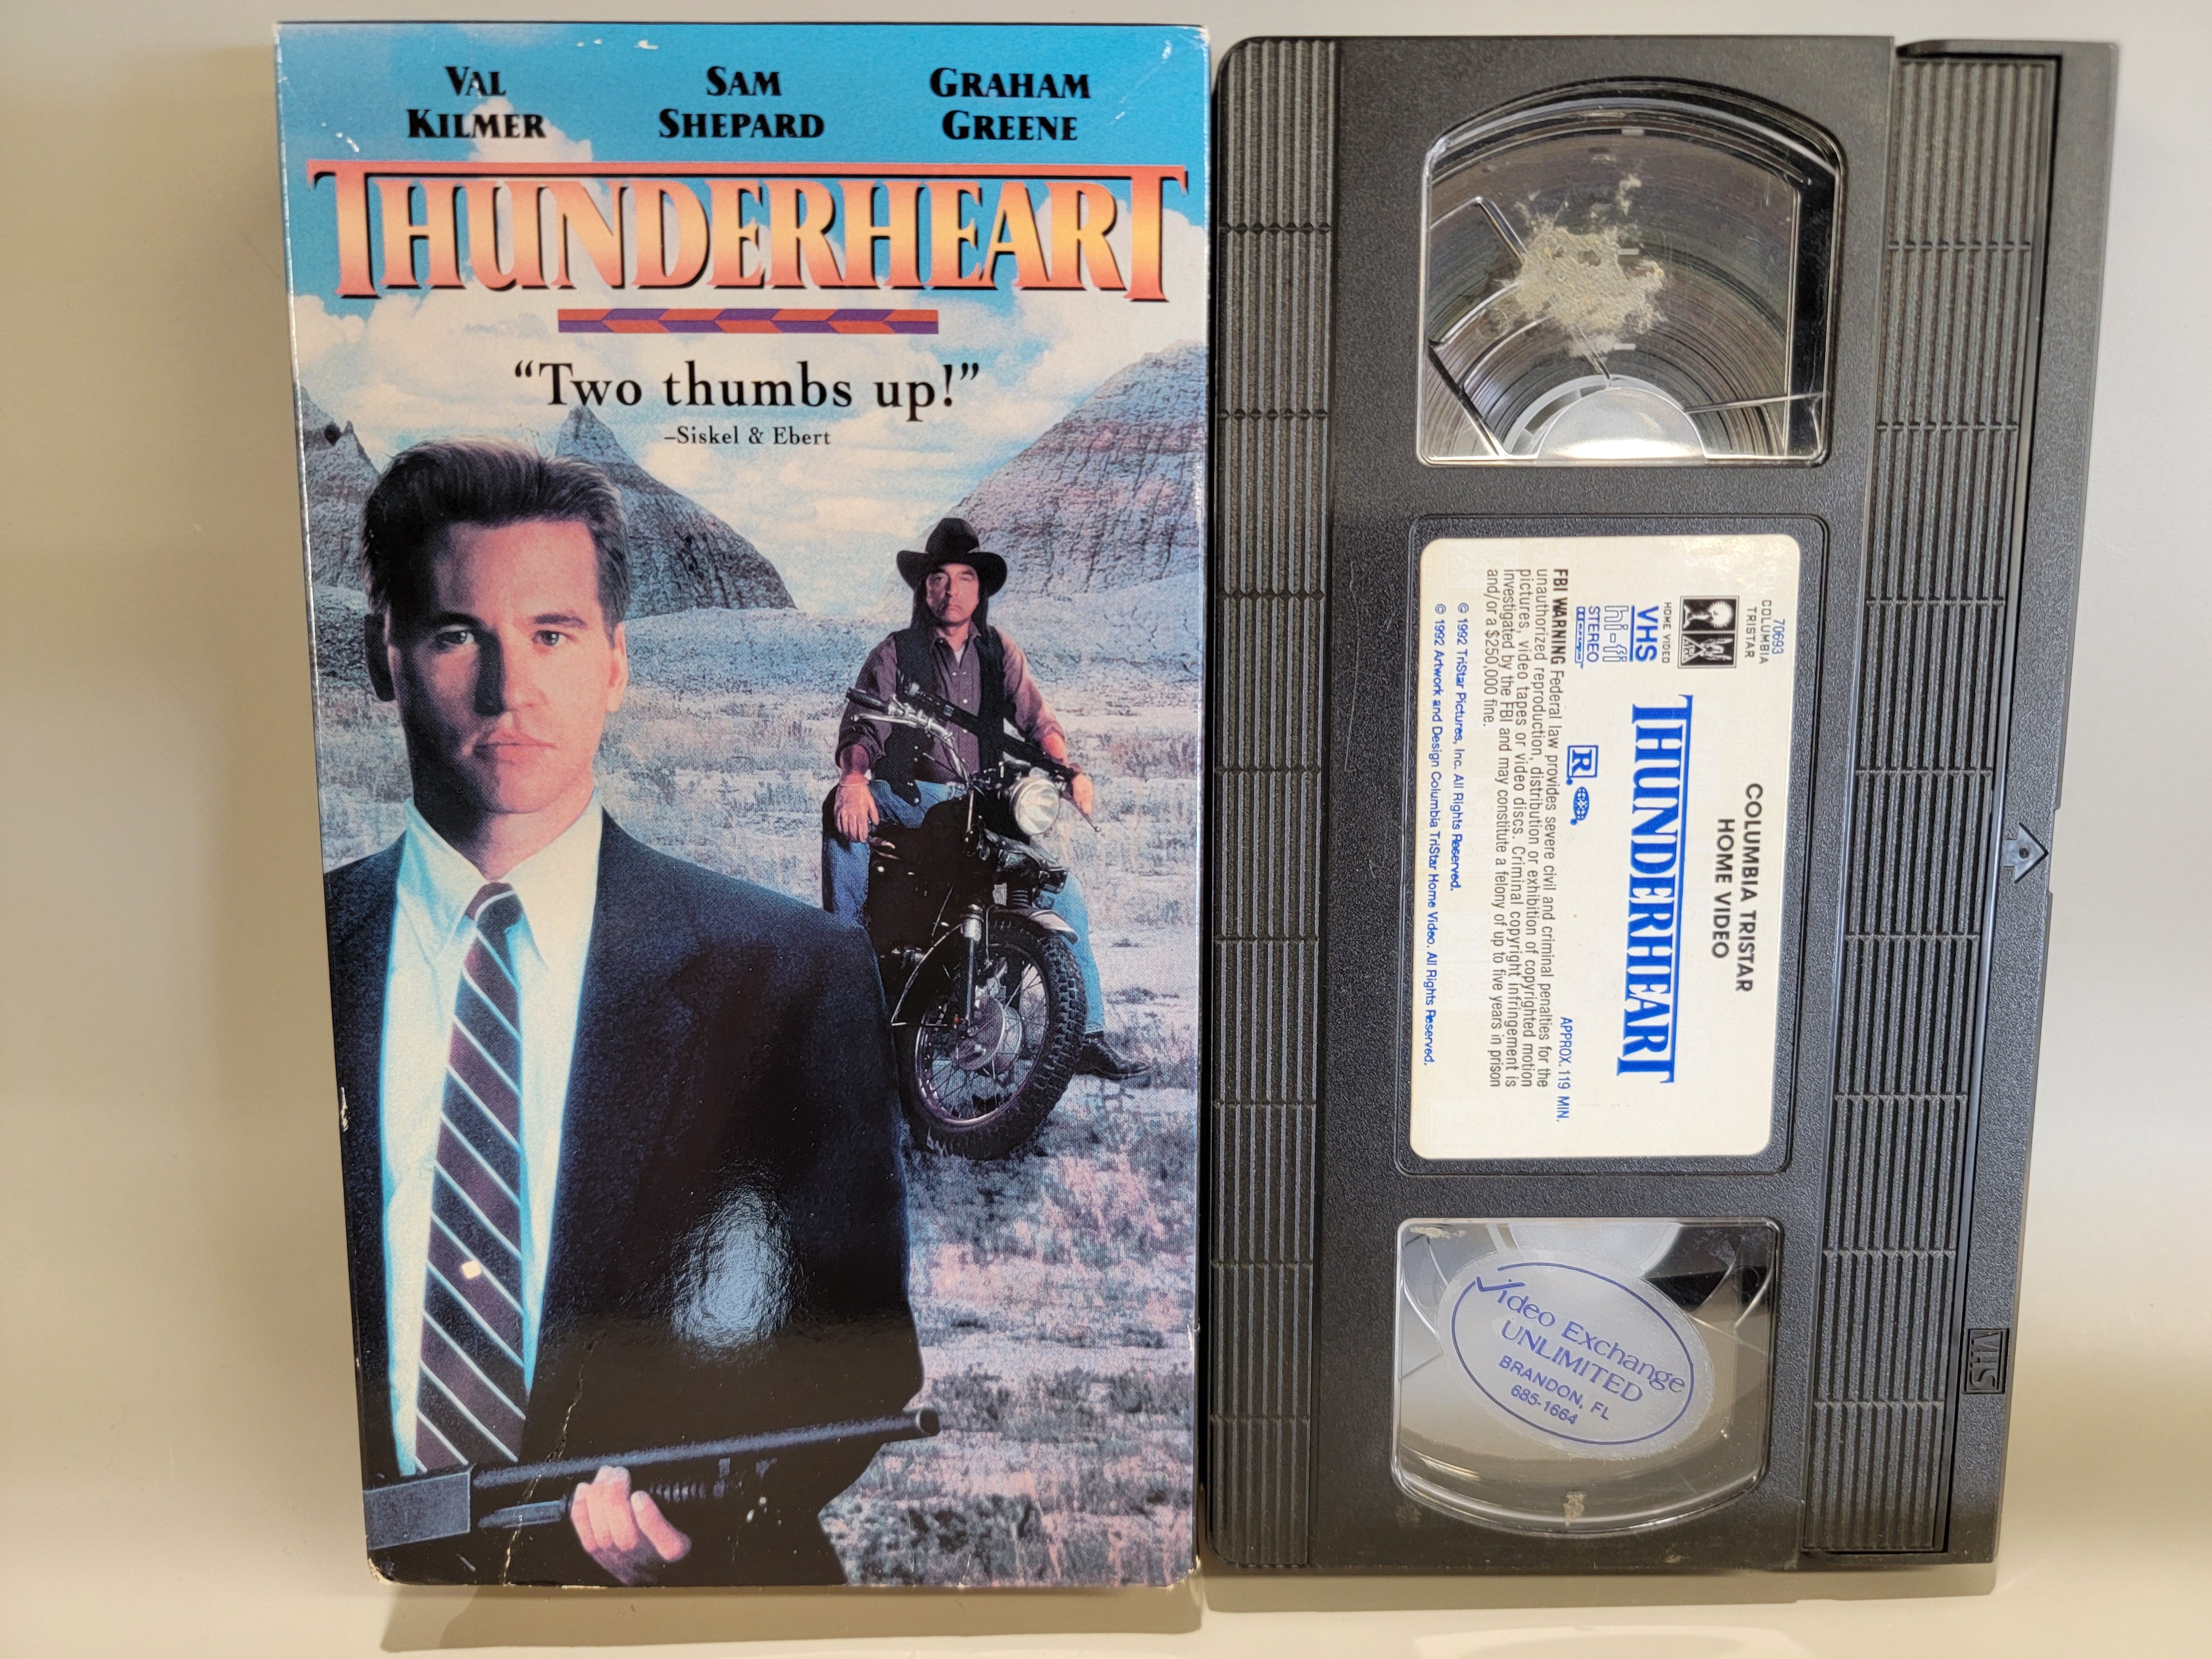 THUNDERHEART VHS [USED]